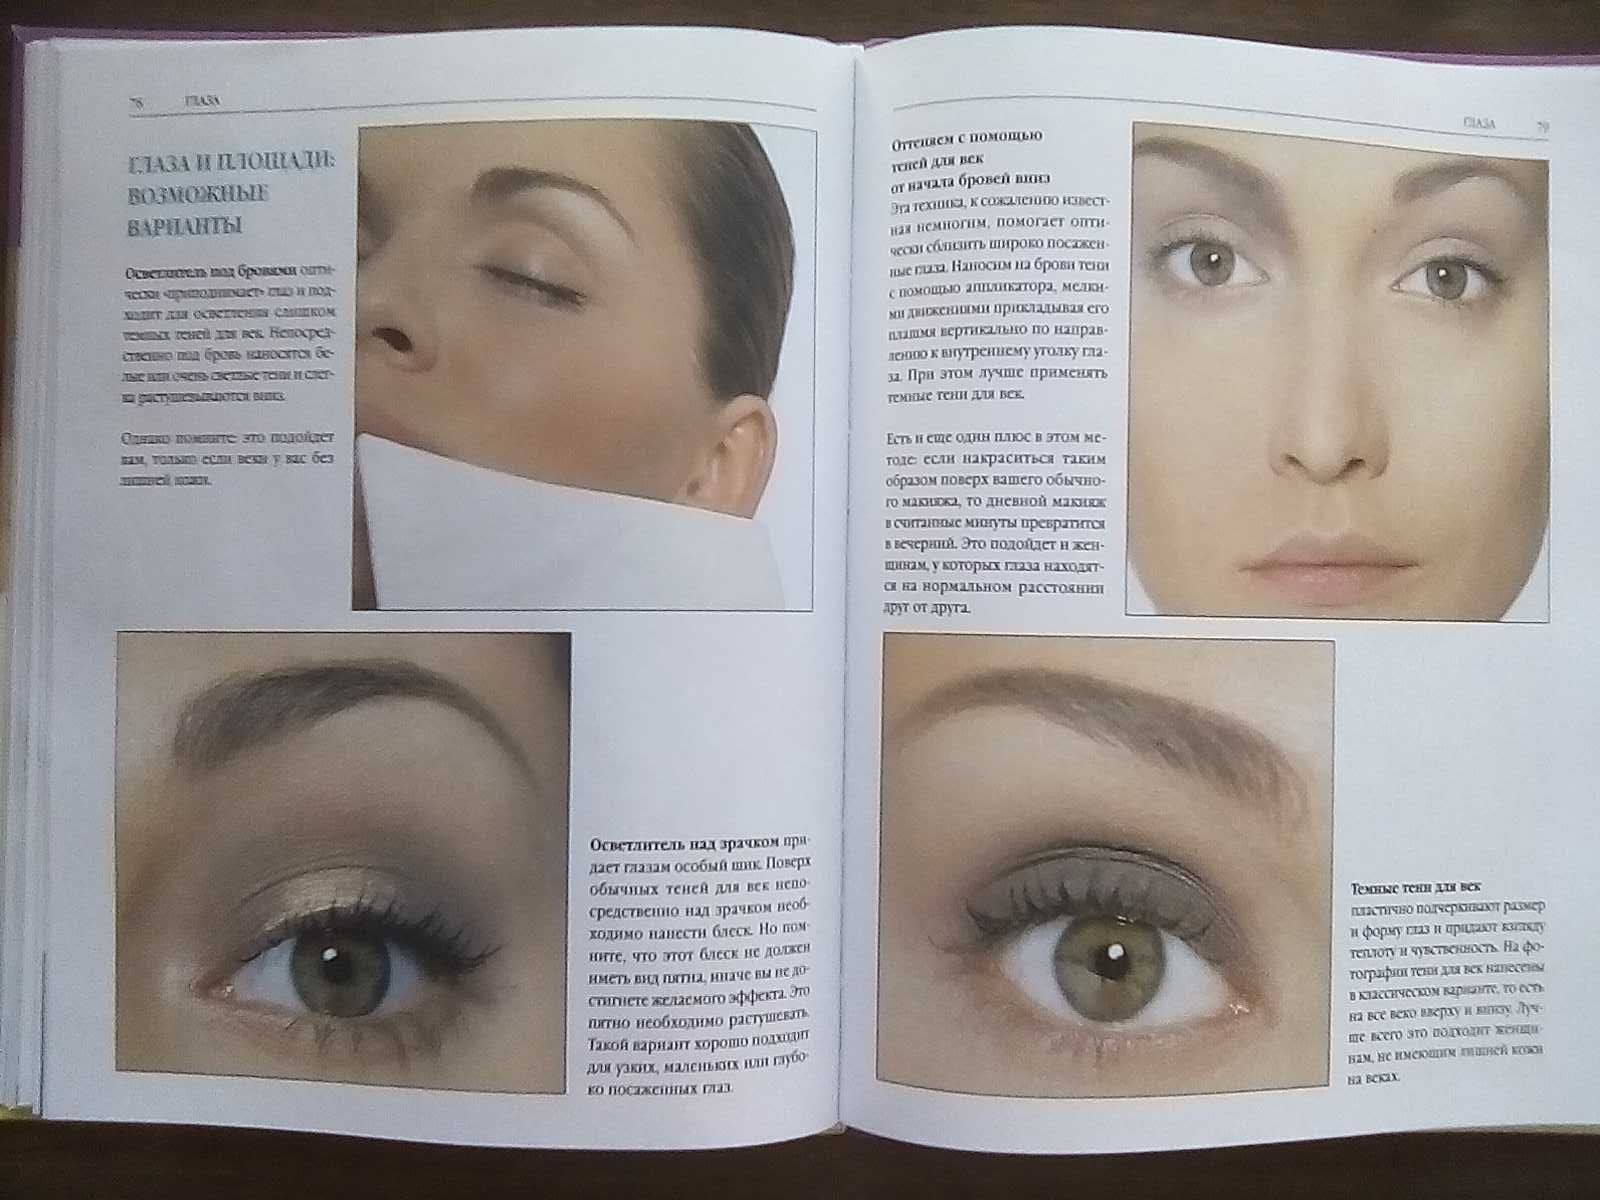 Книга Визаж и макияж